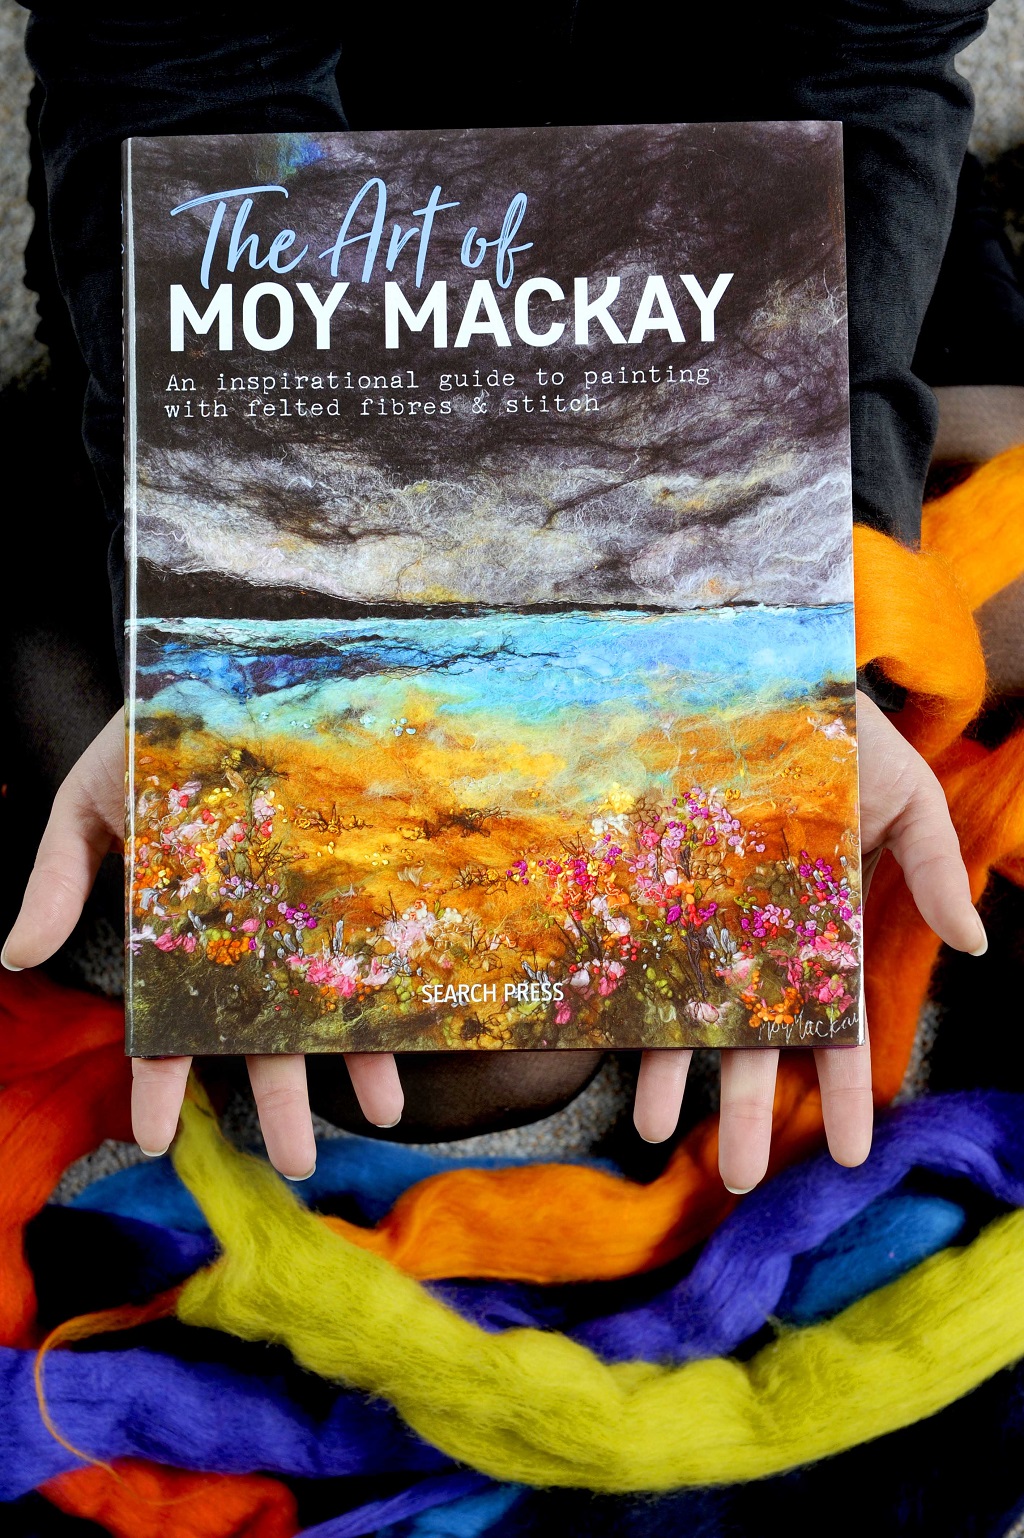  The Art of Moy MacKay (Photo: Colin Hattersley)